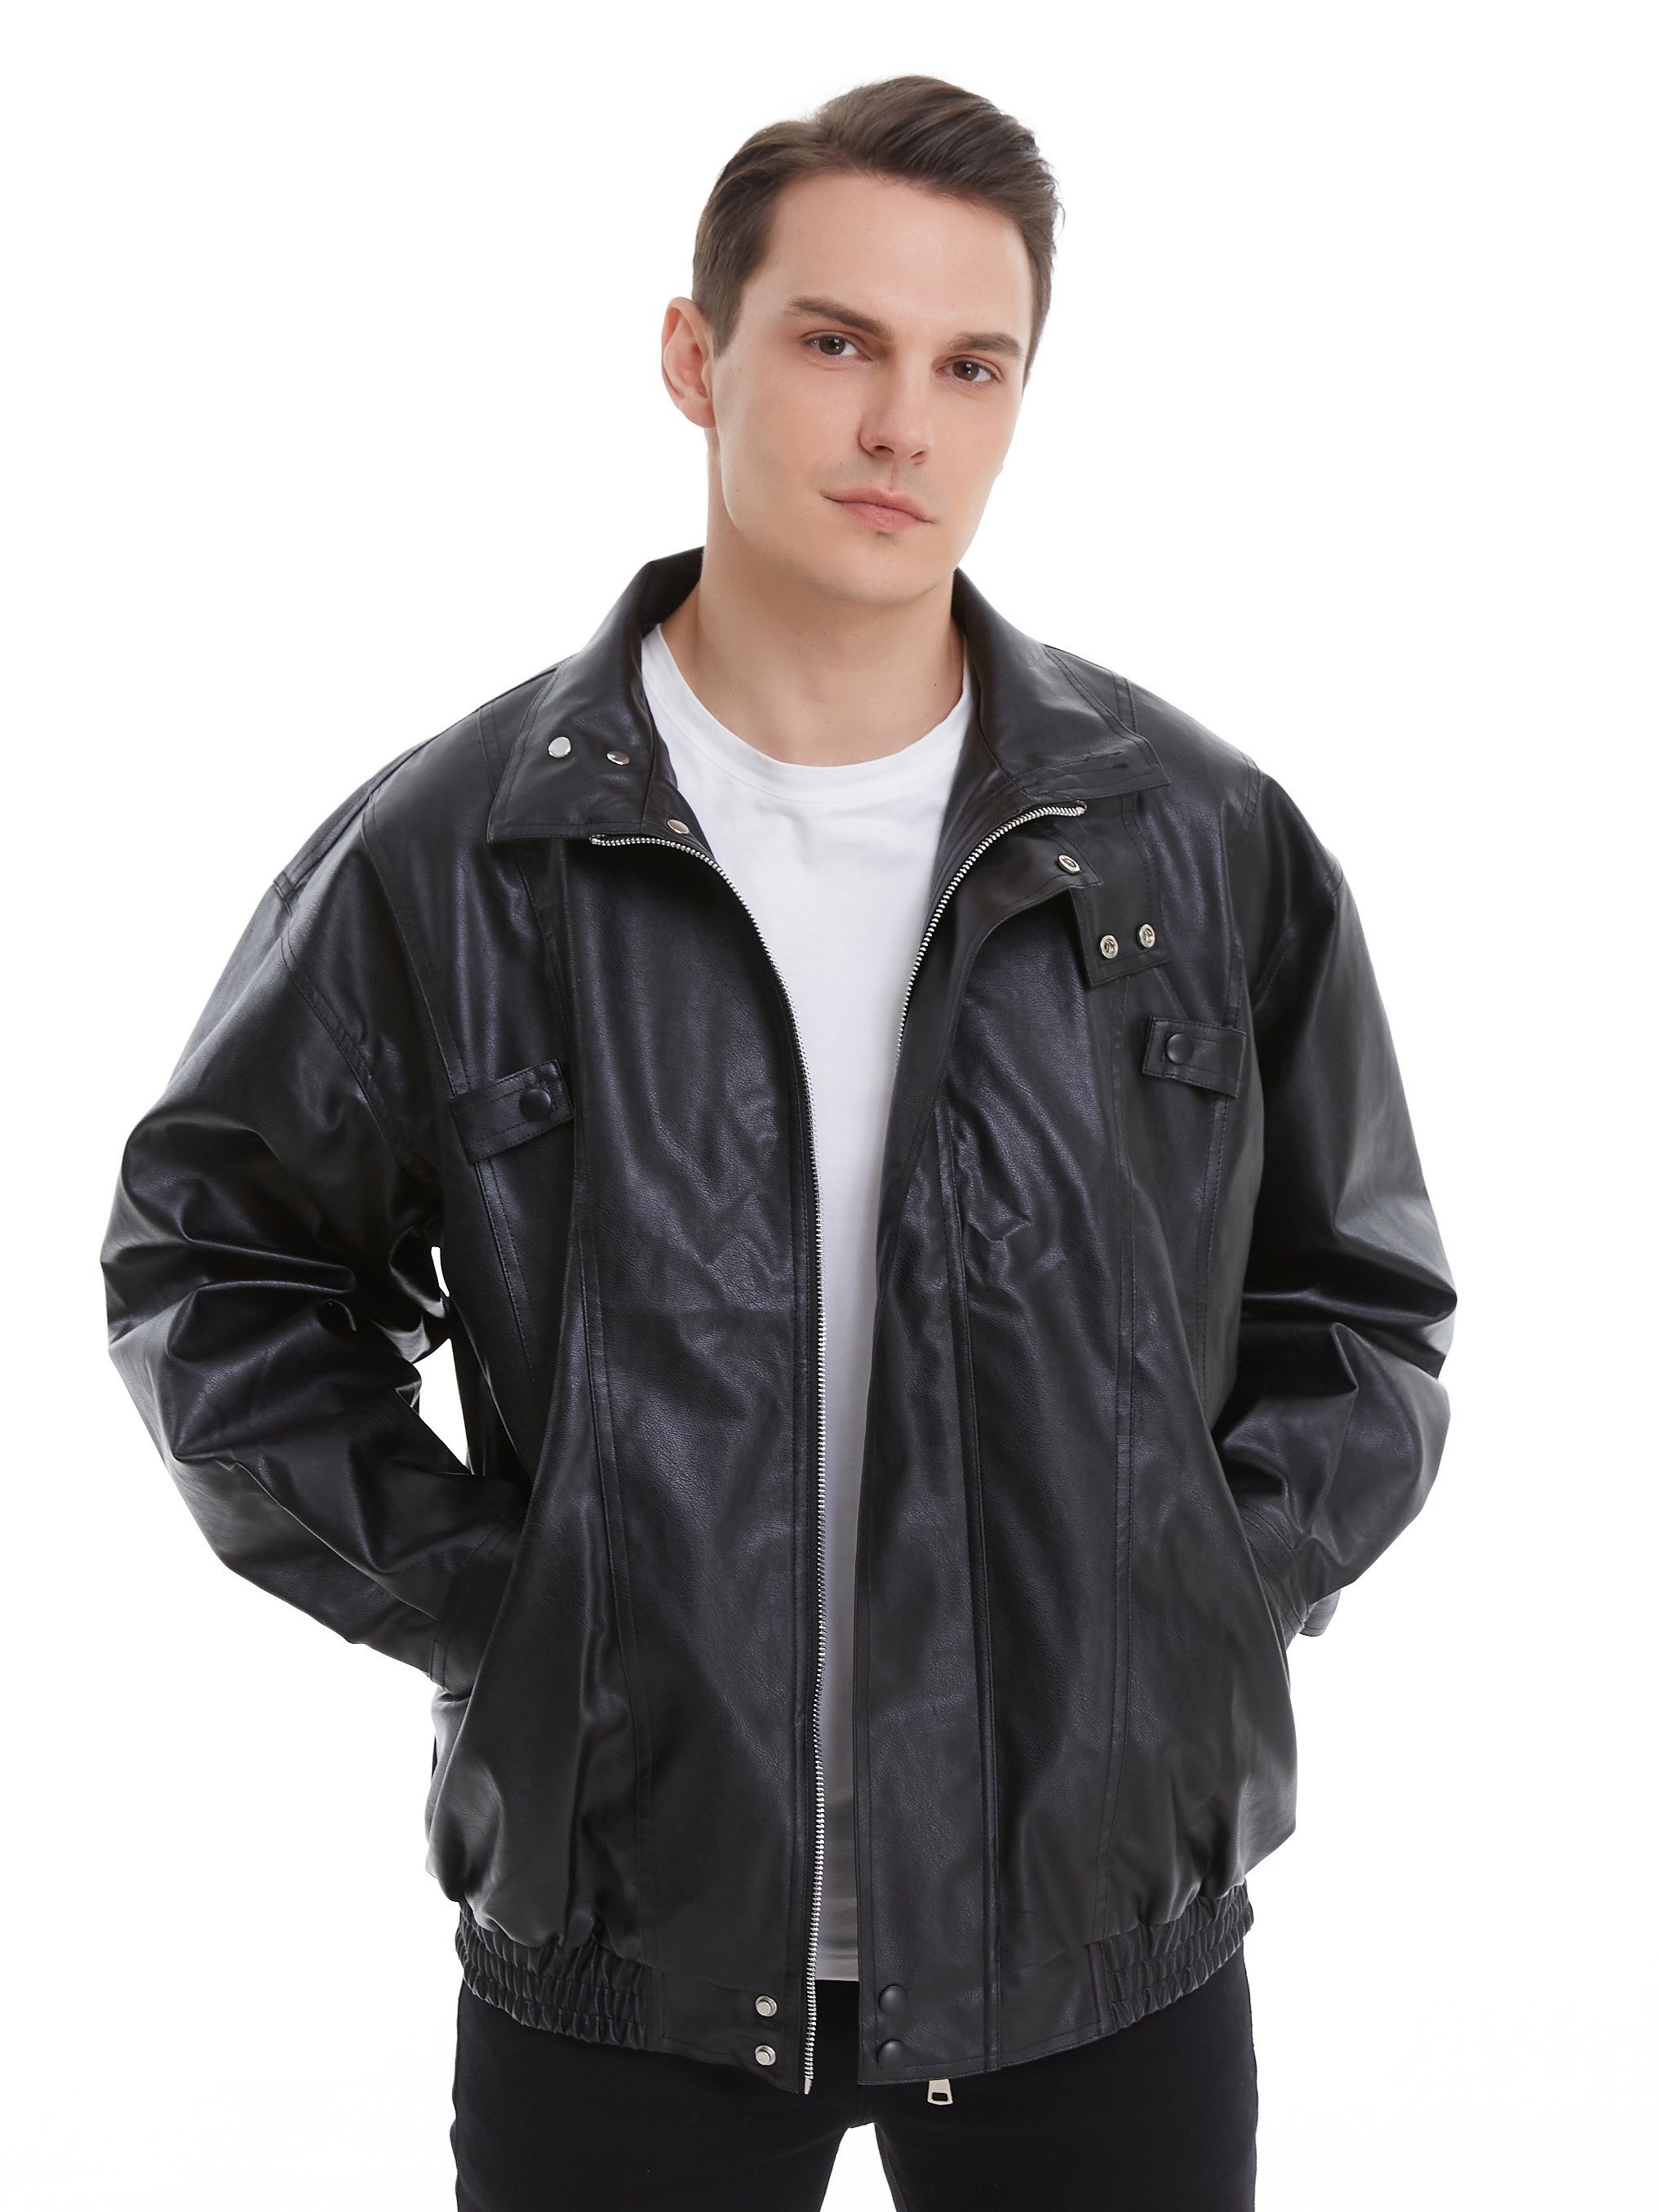 Men's Casual PU Leather Jacket, Chic Loose Fit Bomber Jacket Biker Jacket